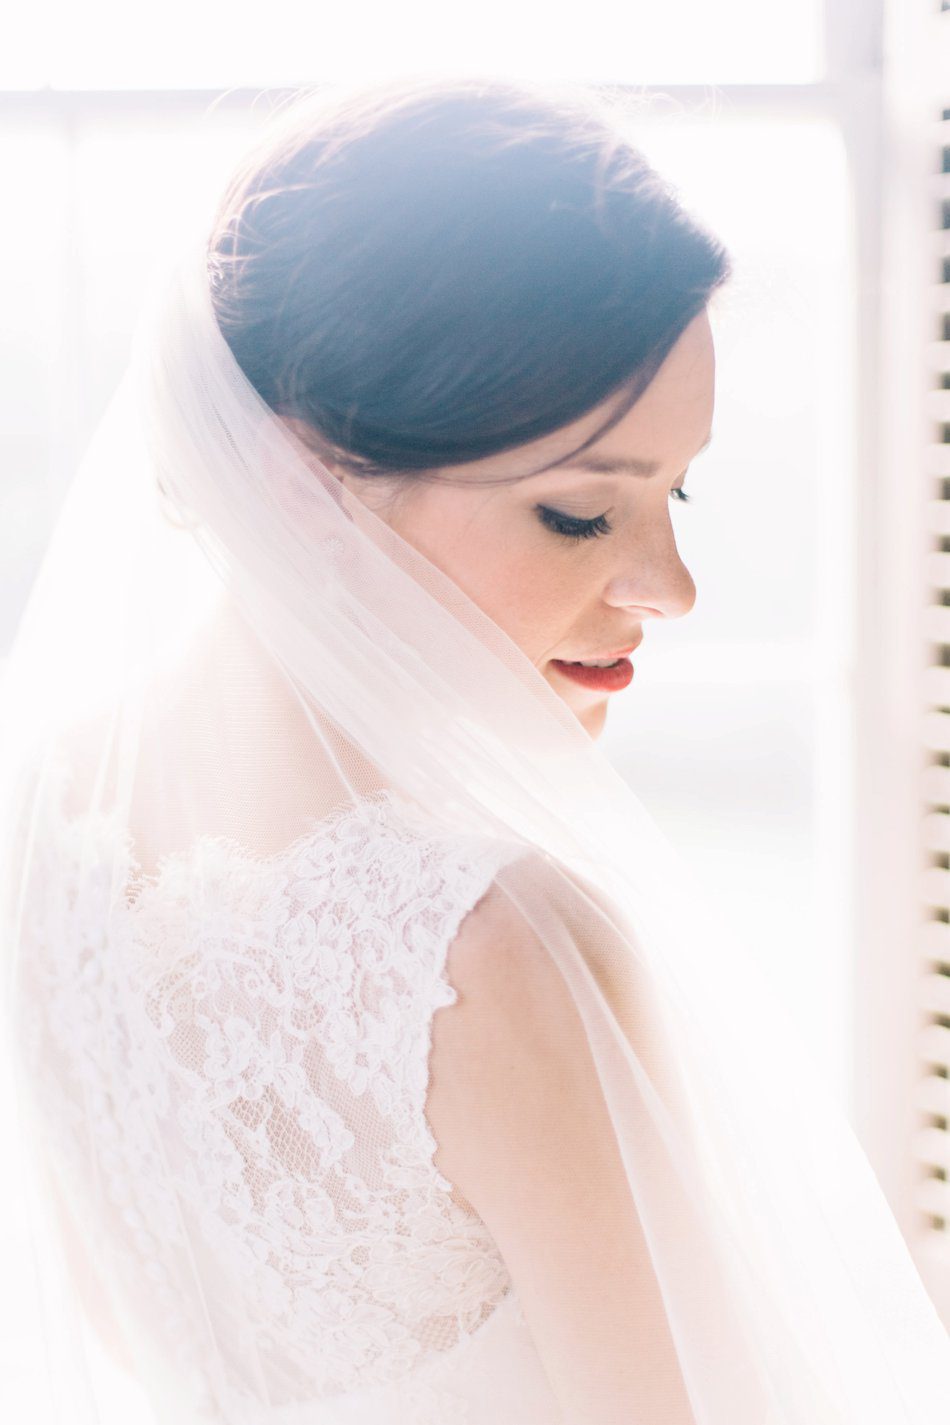 Drayton Hall Bridal Portraits by Catherine Ann Photography